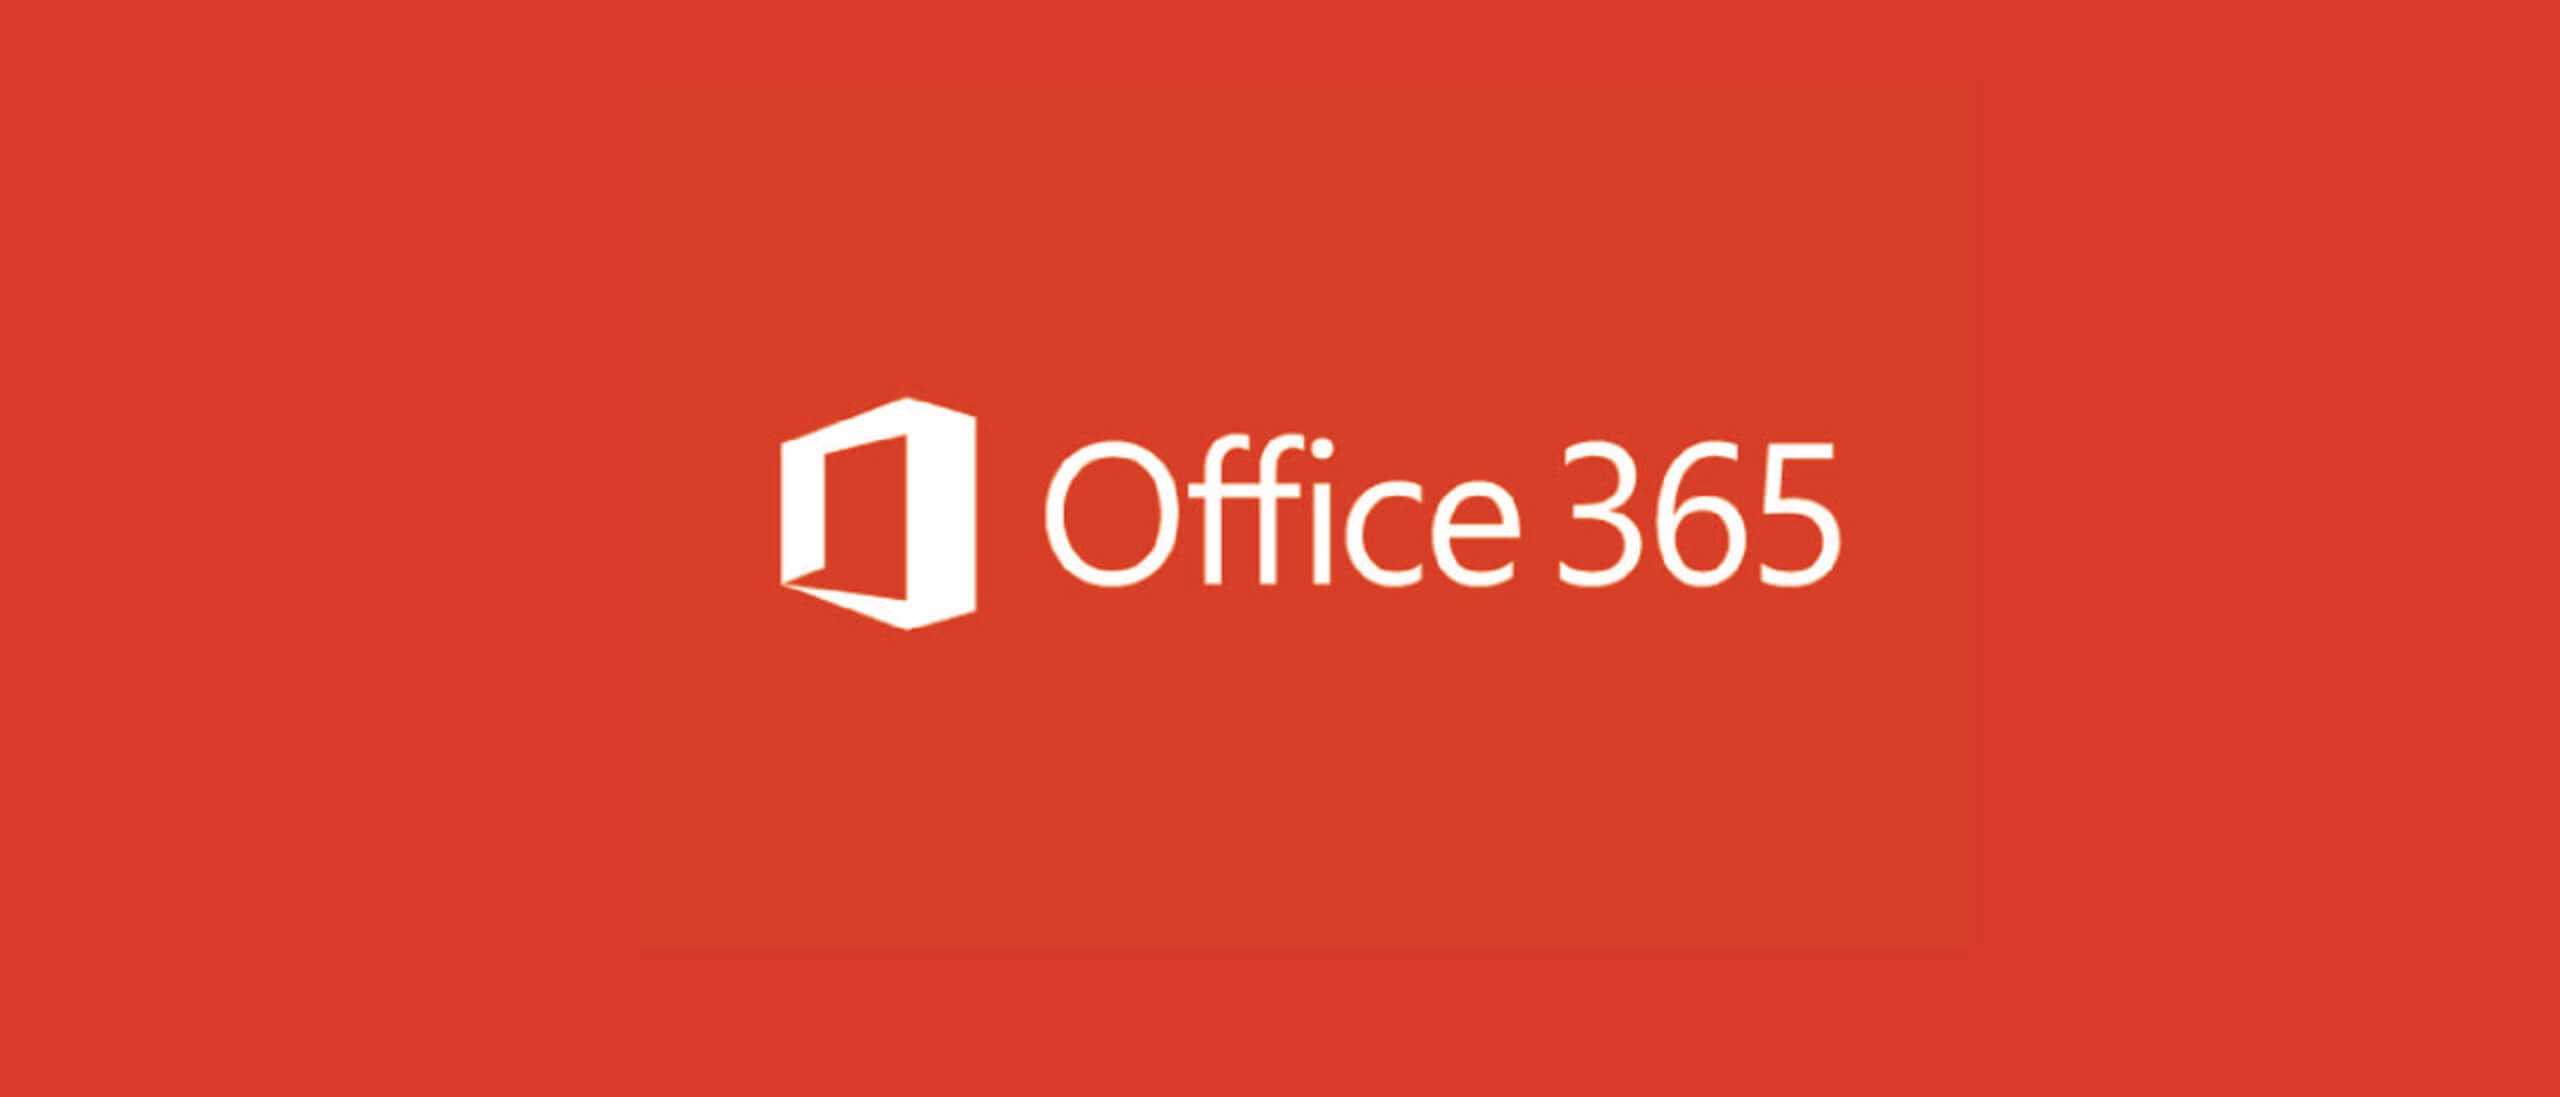 Làm chủ bộ Office 365: Word, Excel, Powerpoint, Access